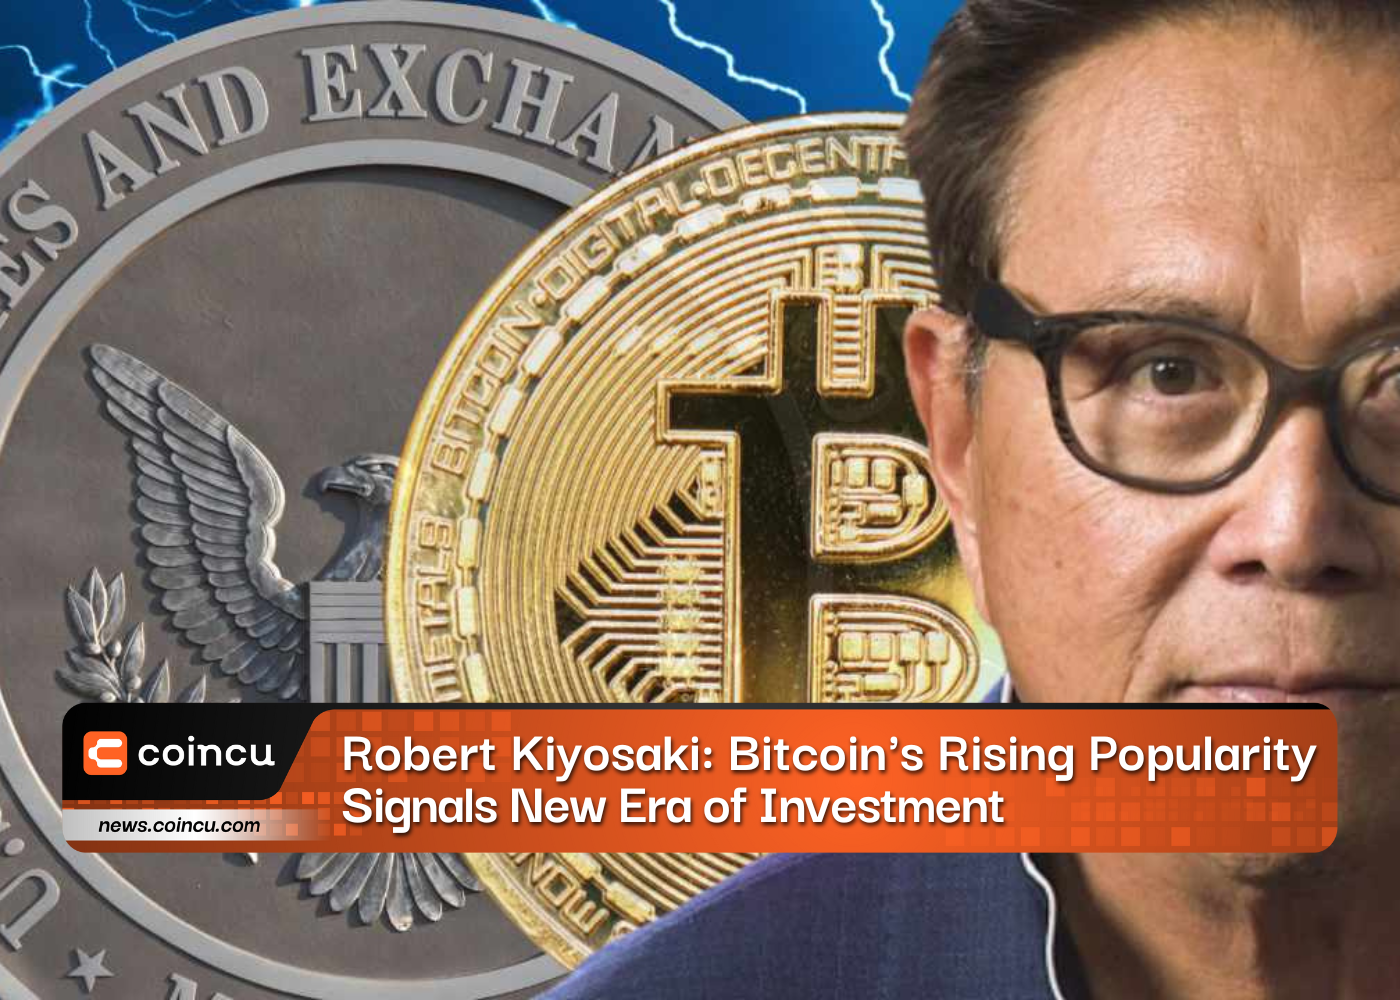 Robert Kiyosaki Bitcoins aumenta su popularidad